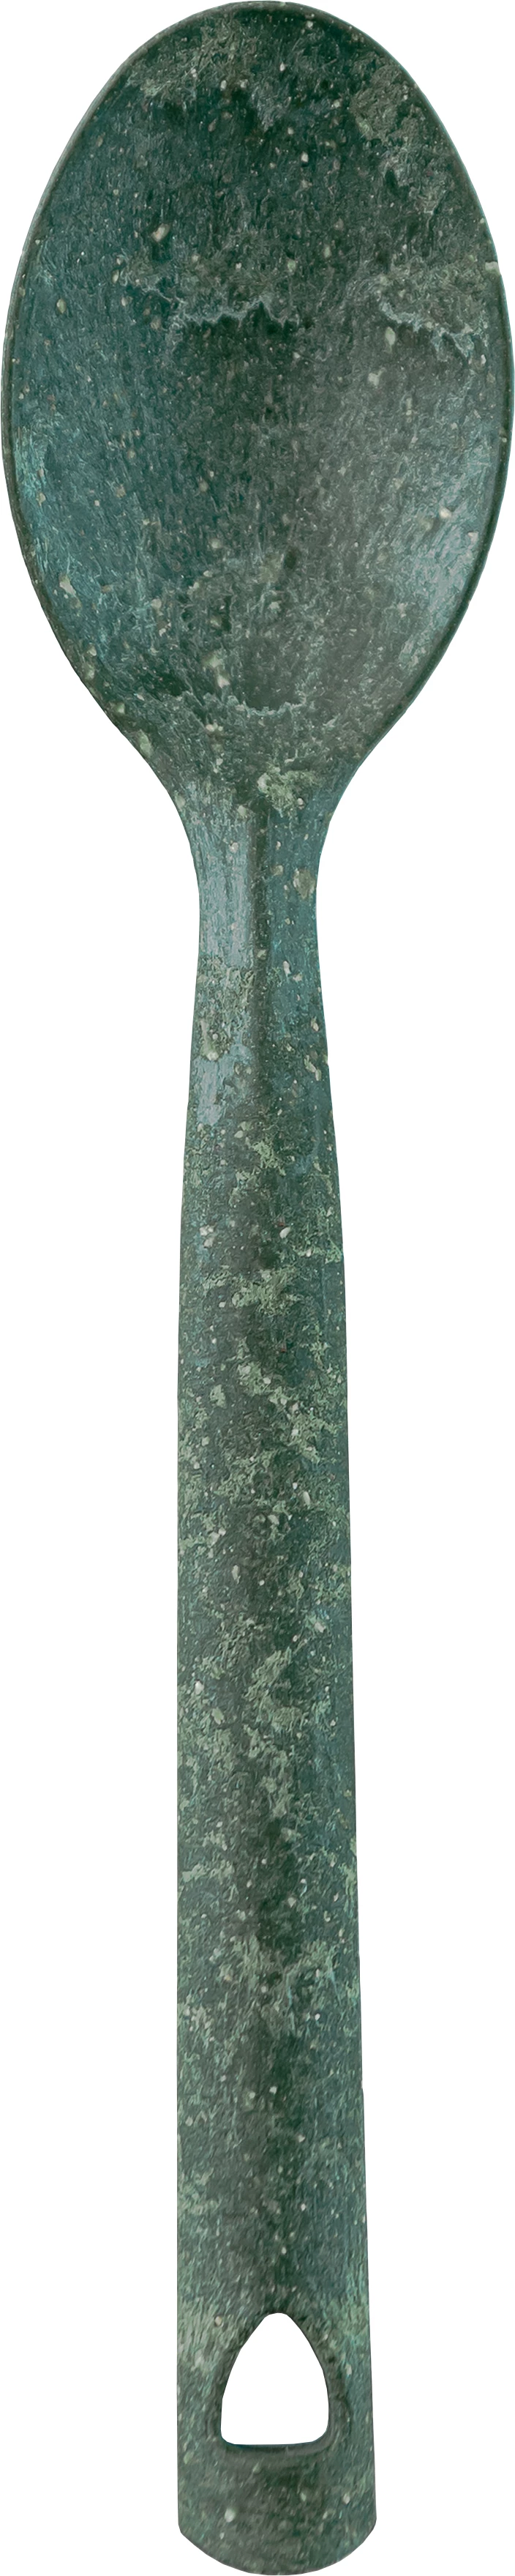 Kupilka teske, grøn, 13,5 cm